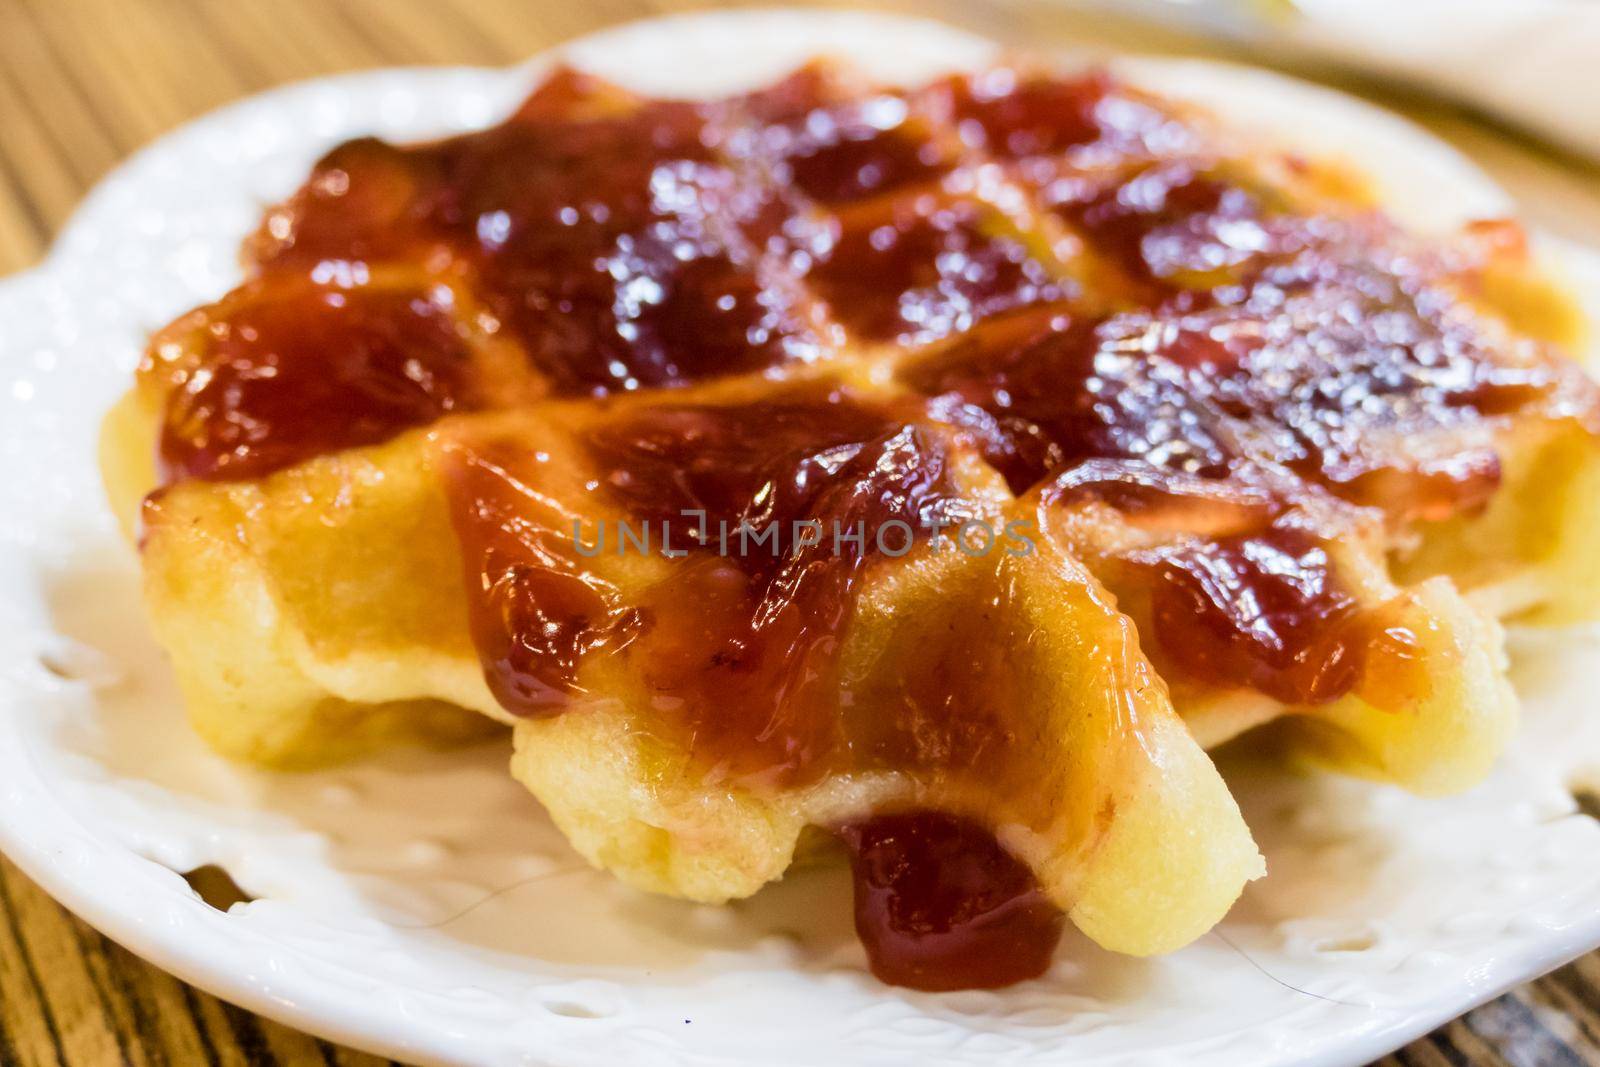 Fresh Belgian liege waffle with strawberry jelly